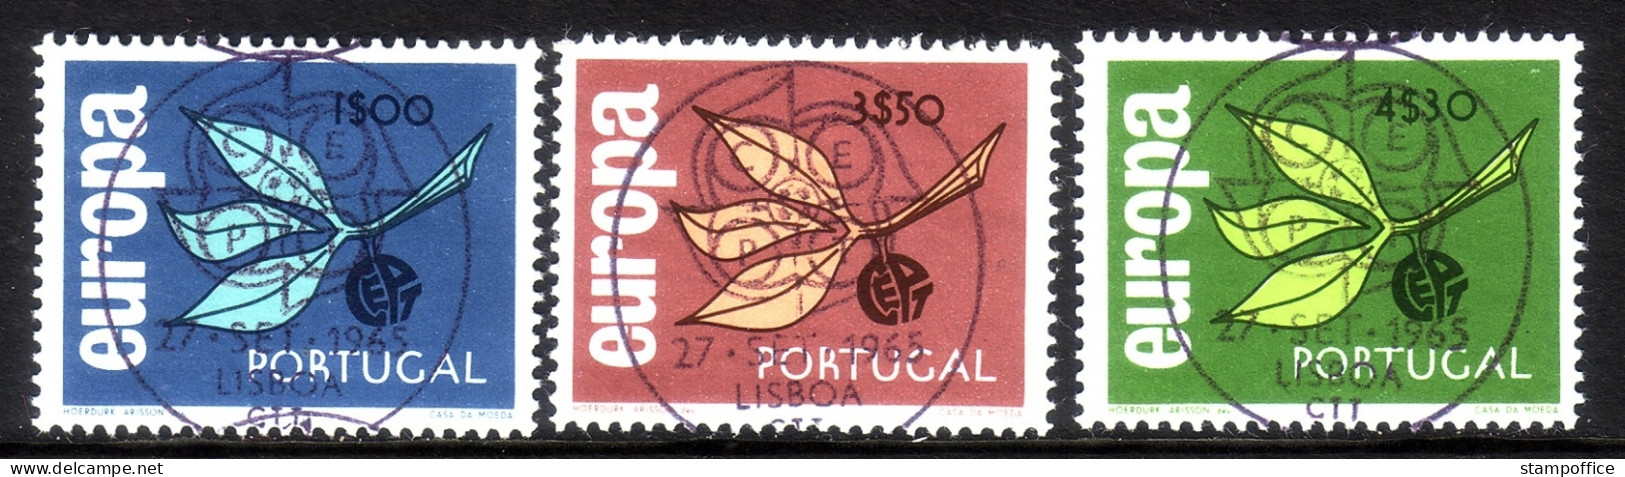 PORTUGAL MI-NR. 990-992 O (VOLLSTEMPEL) EUROPA 1965 ZWEIG - Usado